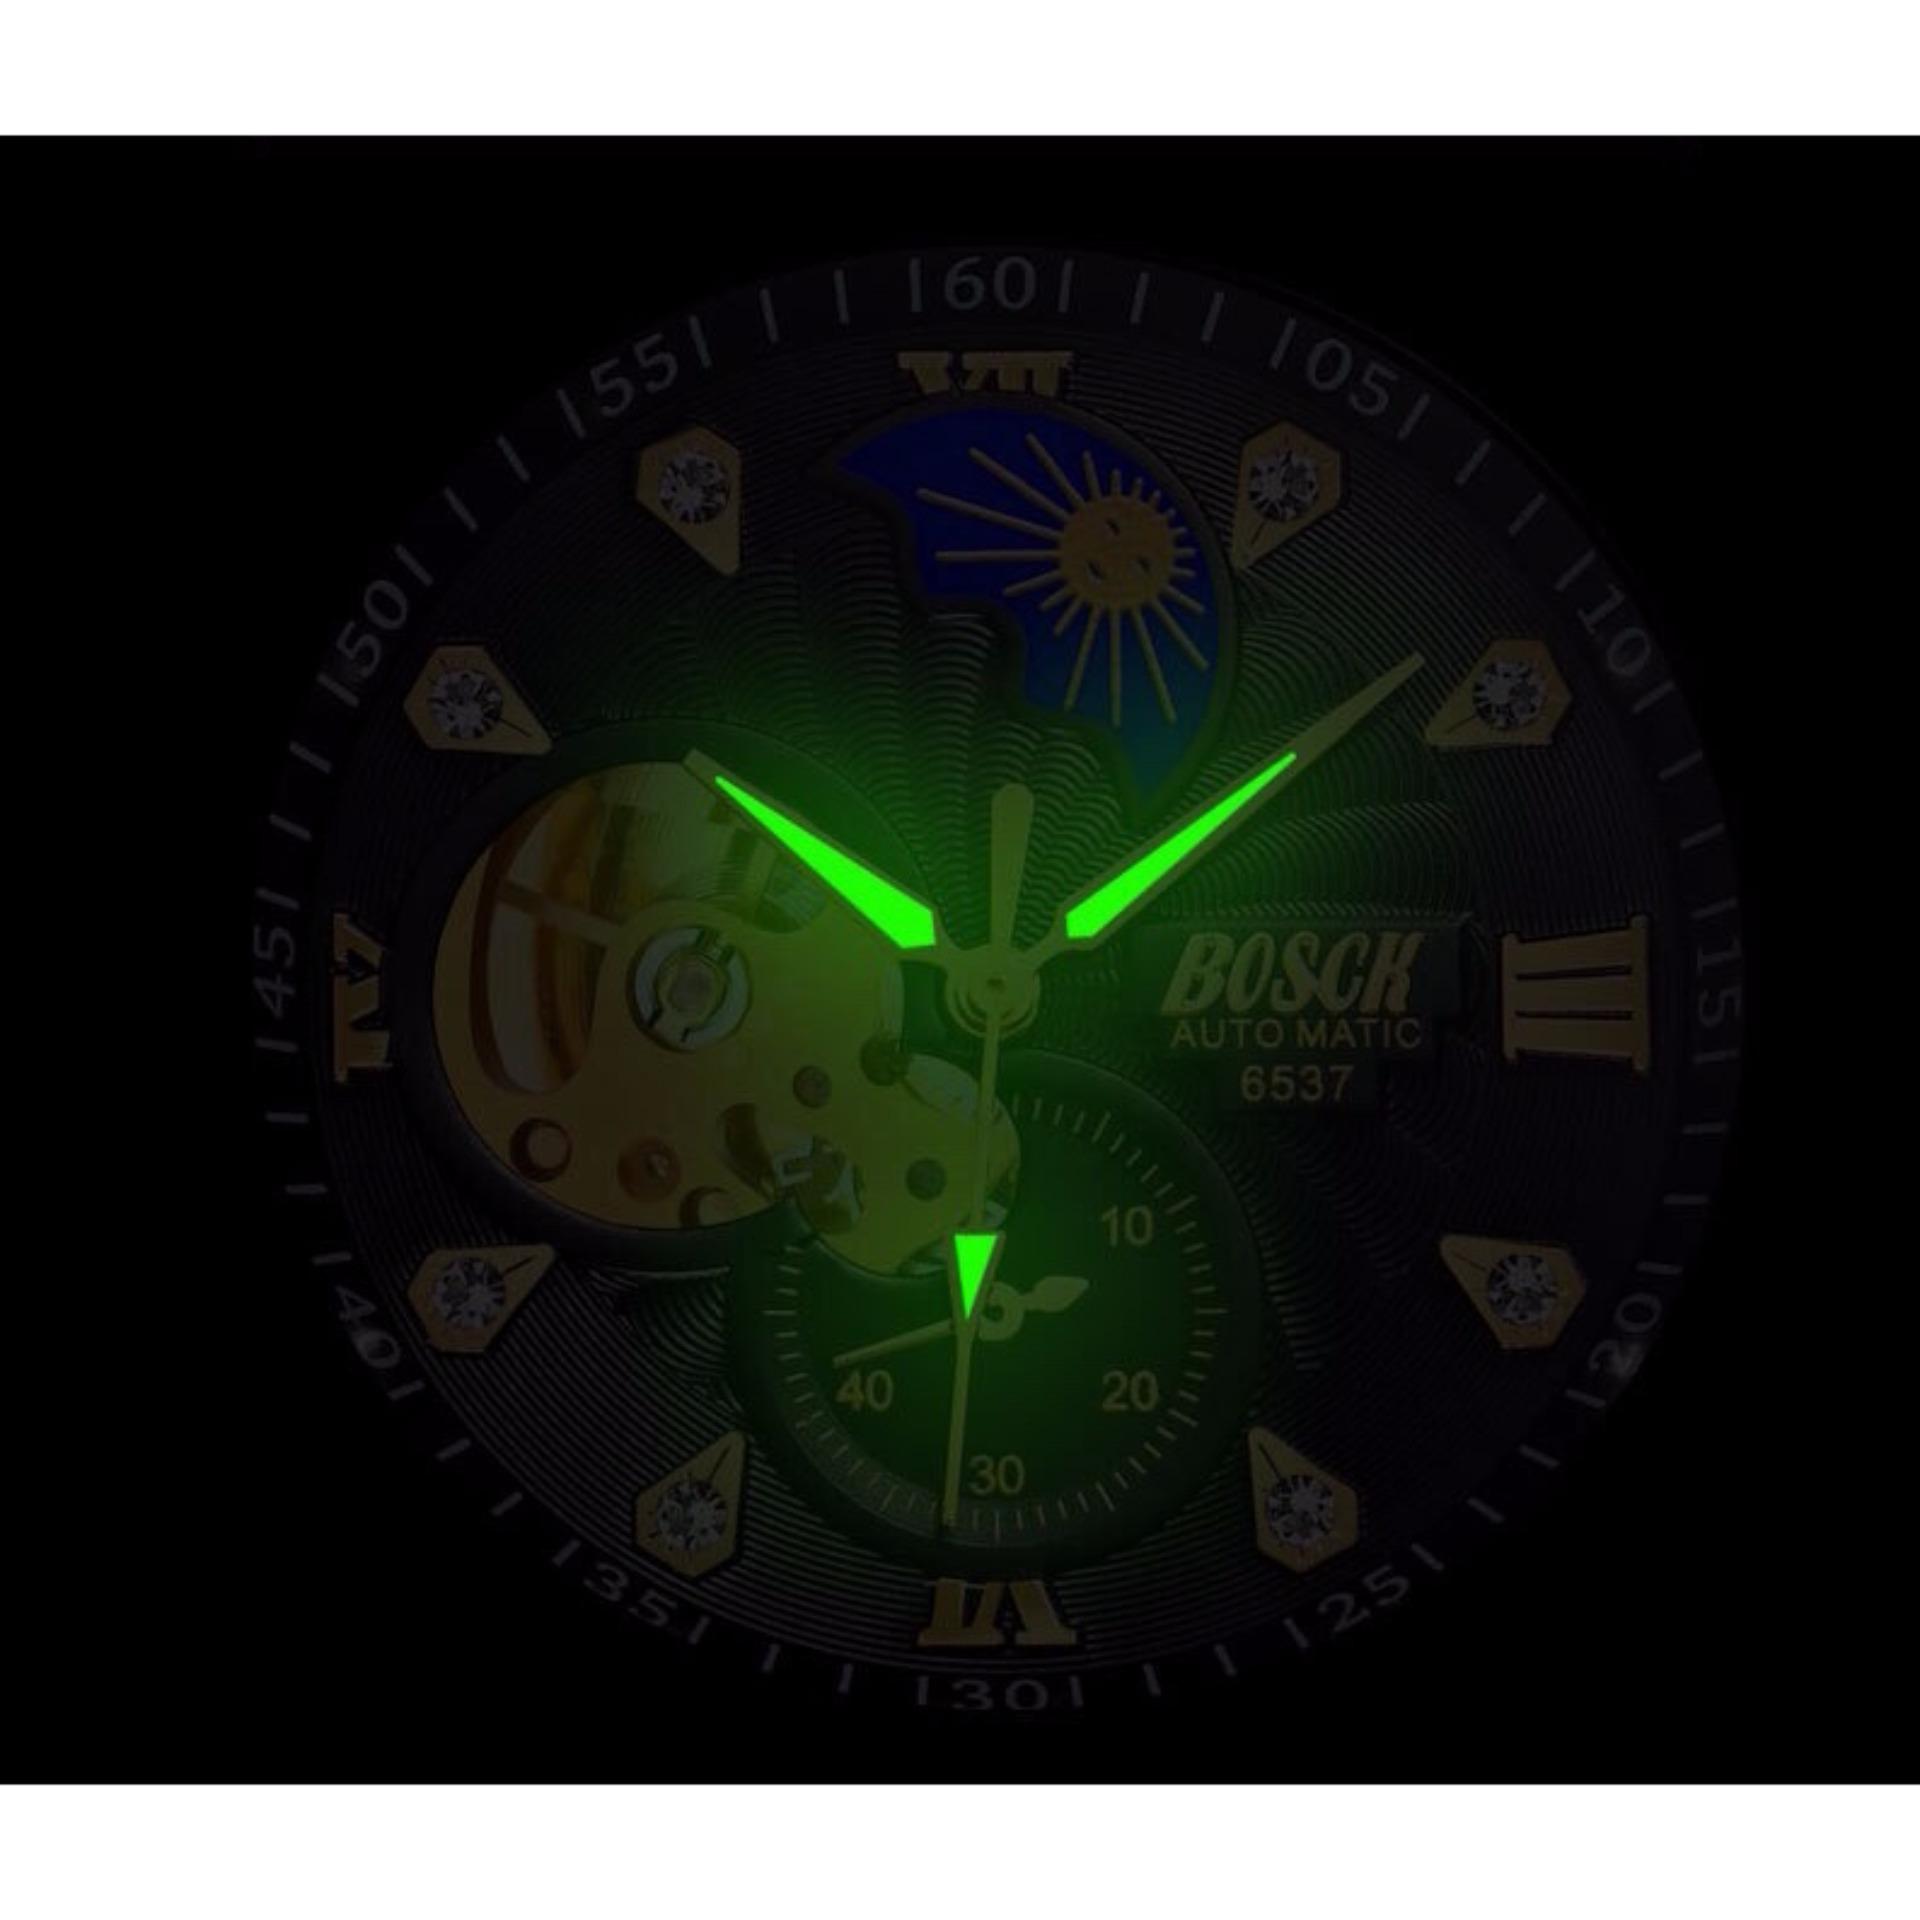 Đồng hồ cơ Automatic nam dây thép Bosck 6537 Golden (Dây Demi, Mặt Đen) + Tặng Kèm Hộp